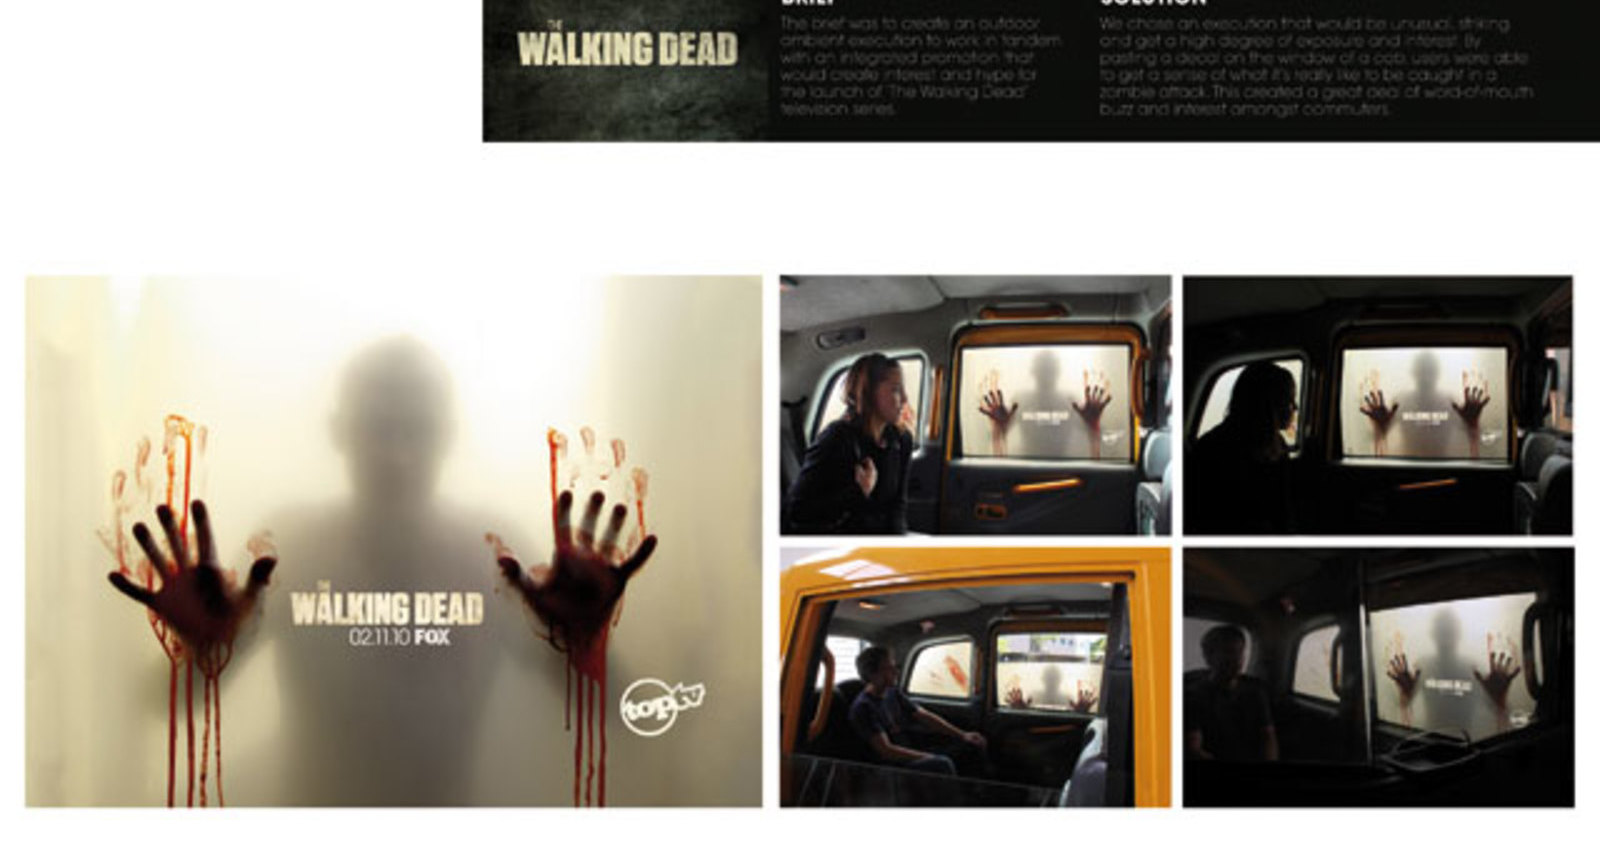 The Walking Dead Cab